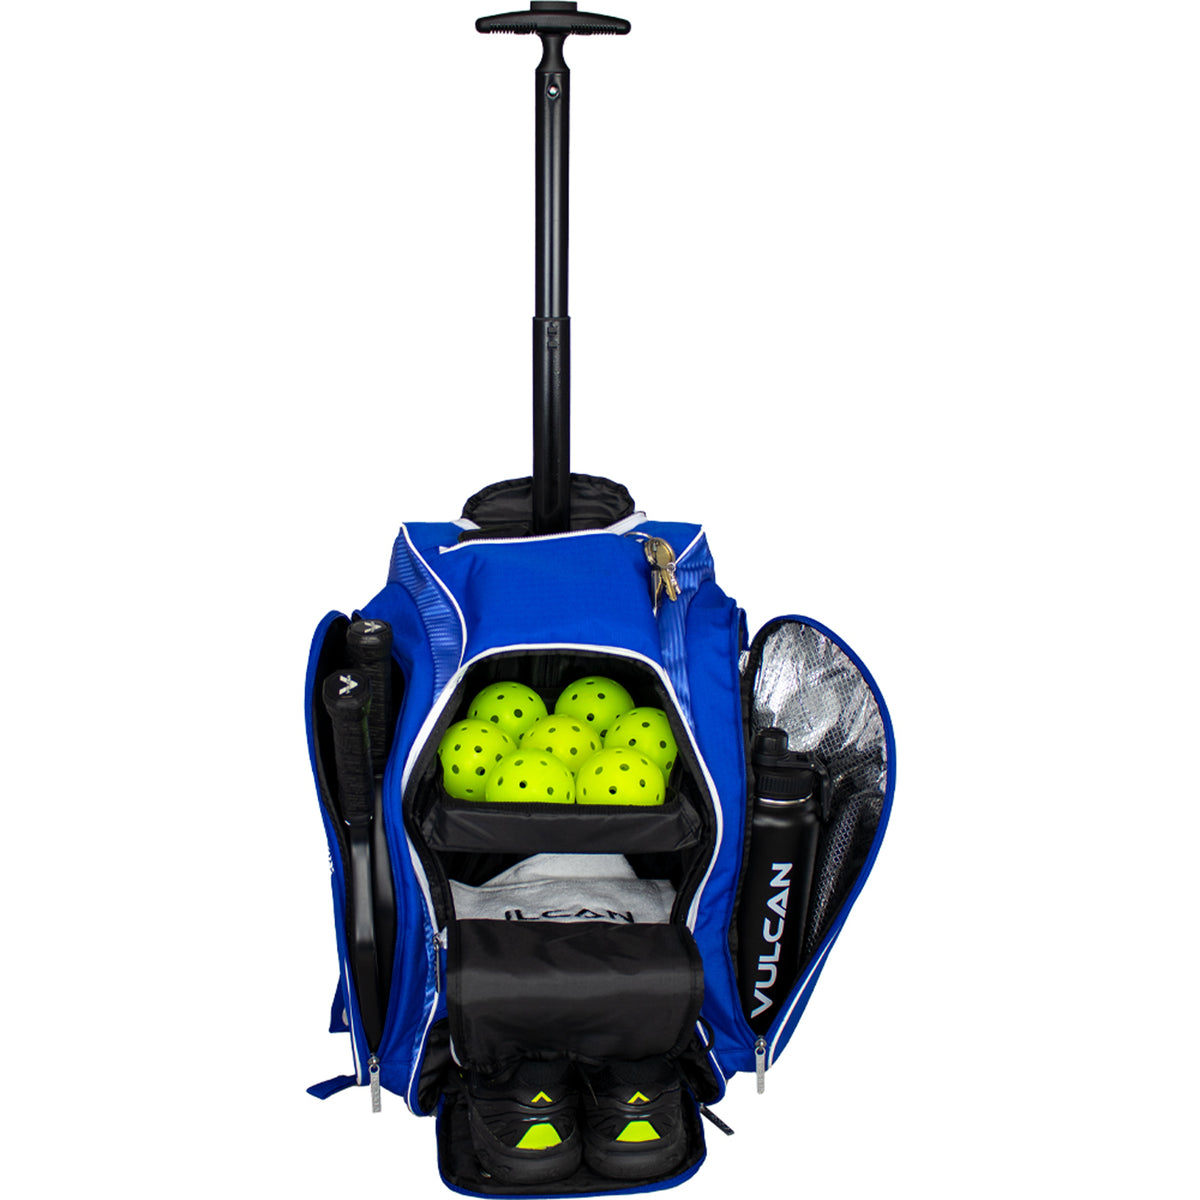 Vulcan Pickleball VMAX Backpack | Roller Bag | Travel Friendly